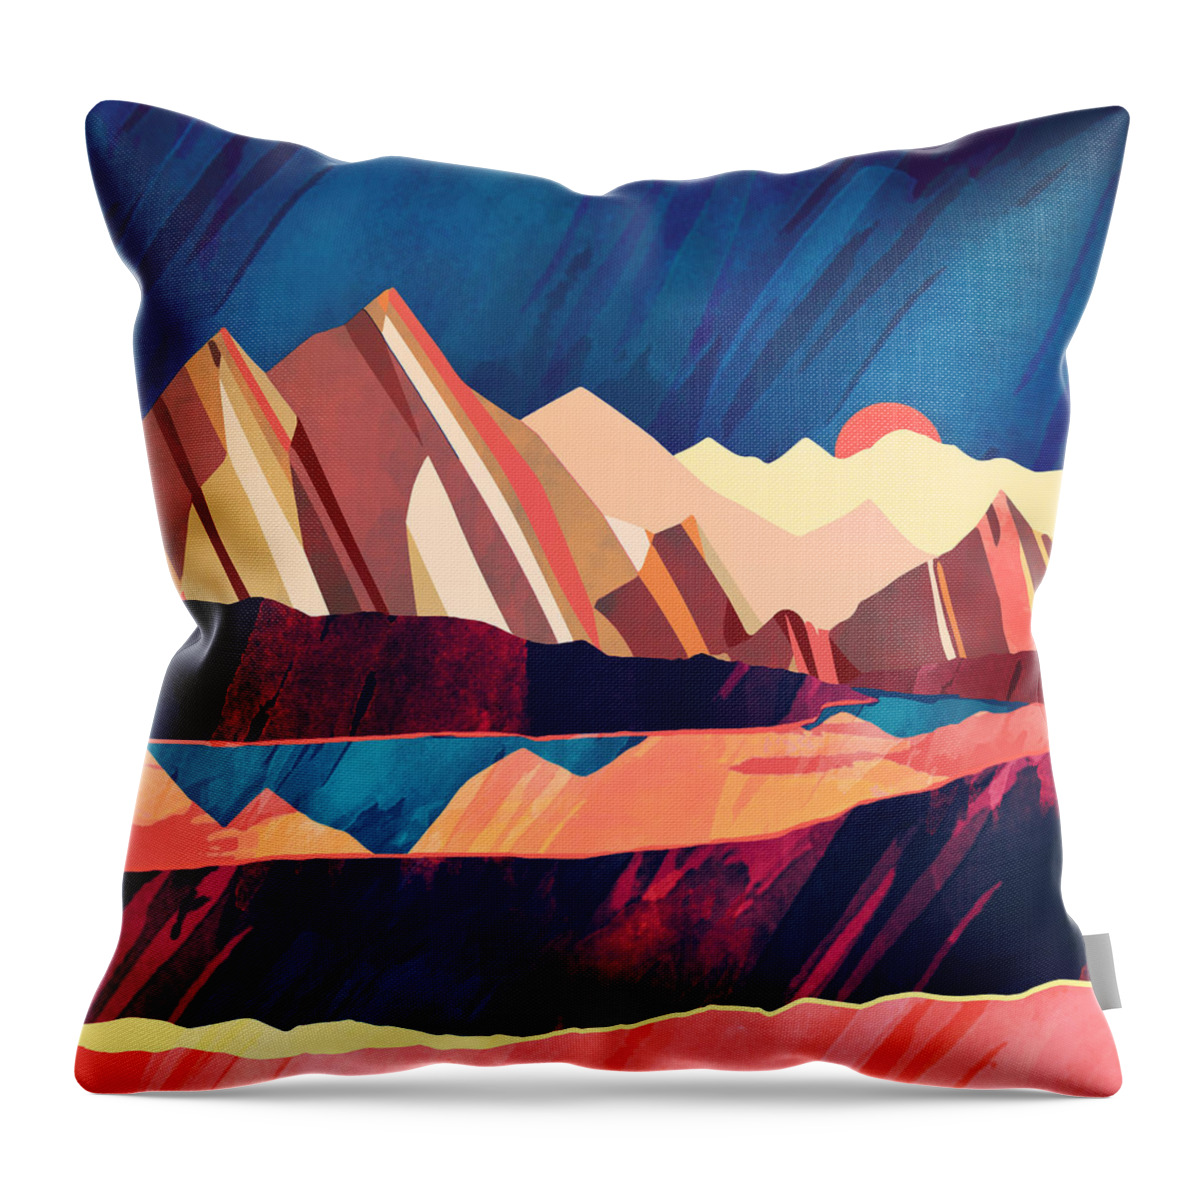 Desert Throw Pillow featuring the digital art Desert Valley by Spacefrog Designs